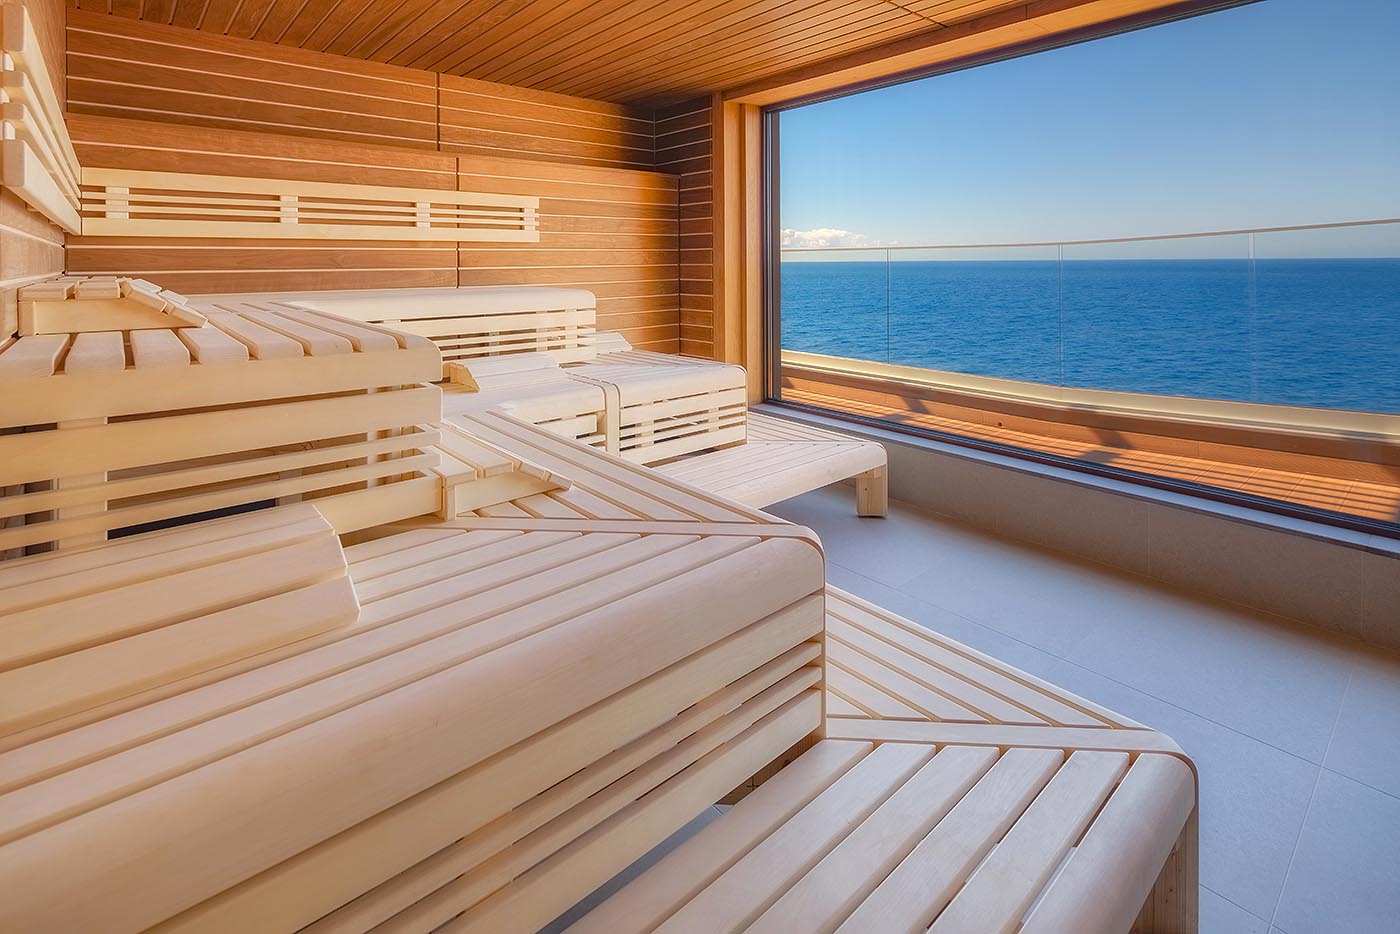 Gastheer van ondeugd Min Panoramic SPA, sauna, steam bath | Planning + Construction